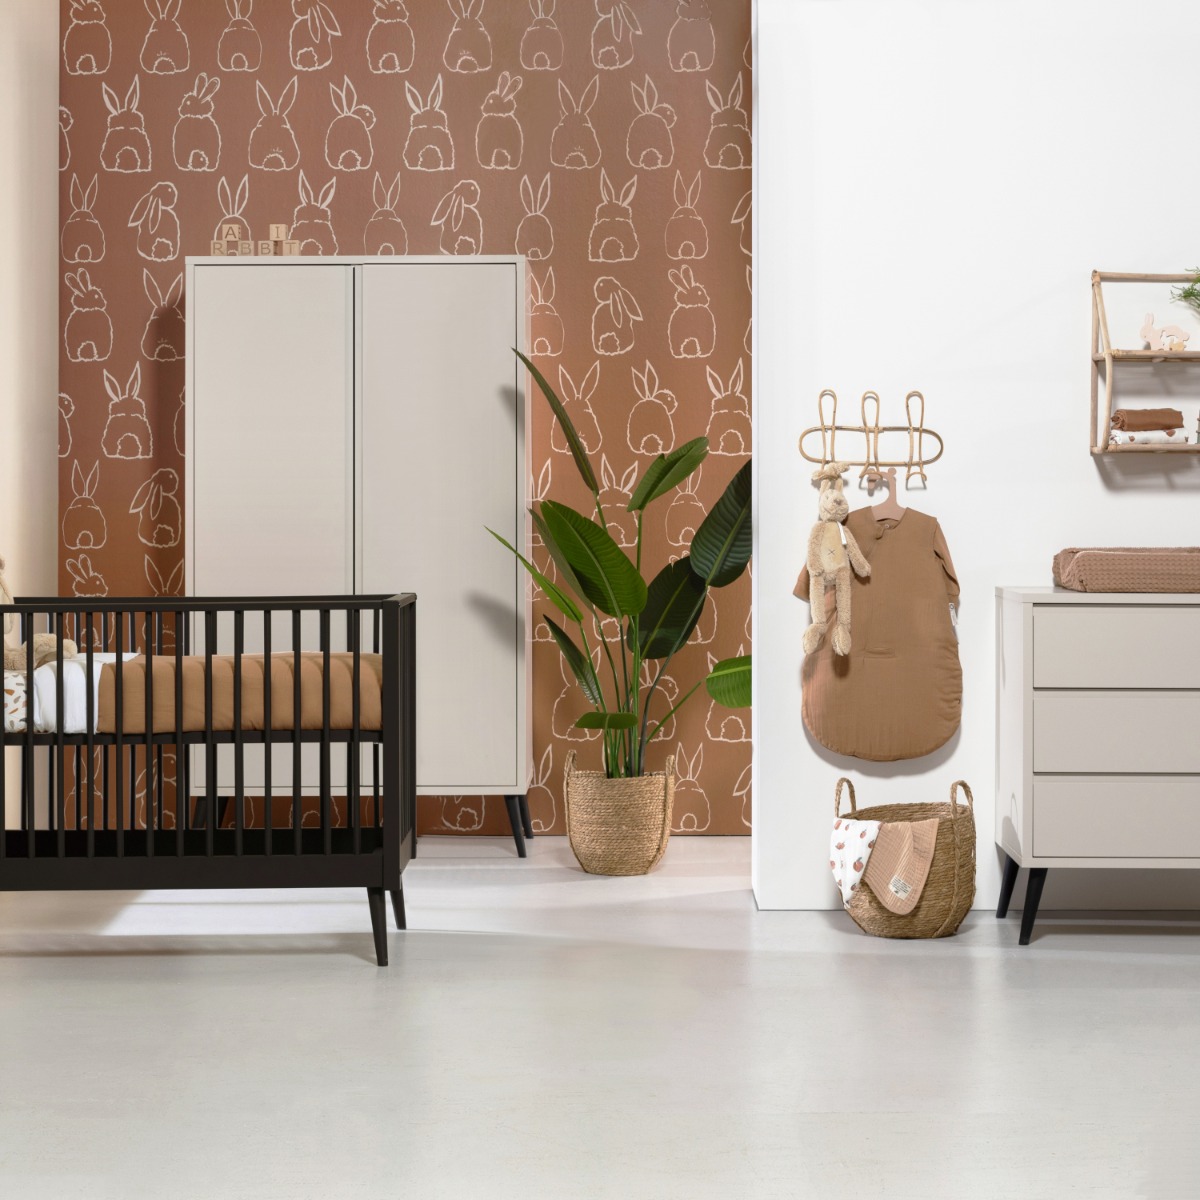 Europe Baby Sterre / Evy Babykamer Oatmeal / Zwart | Bed 60 x 120 cm + Commode + Kast